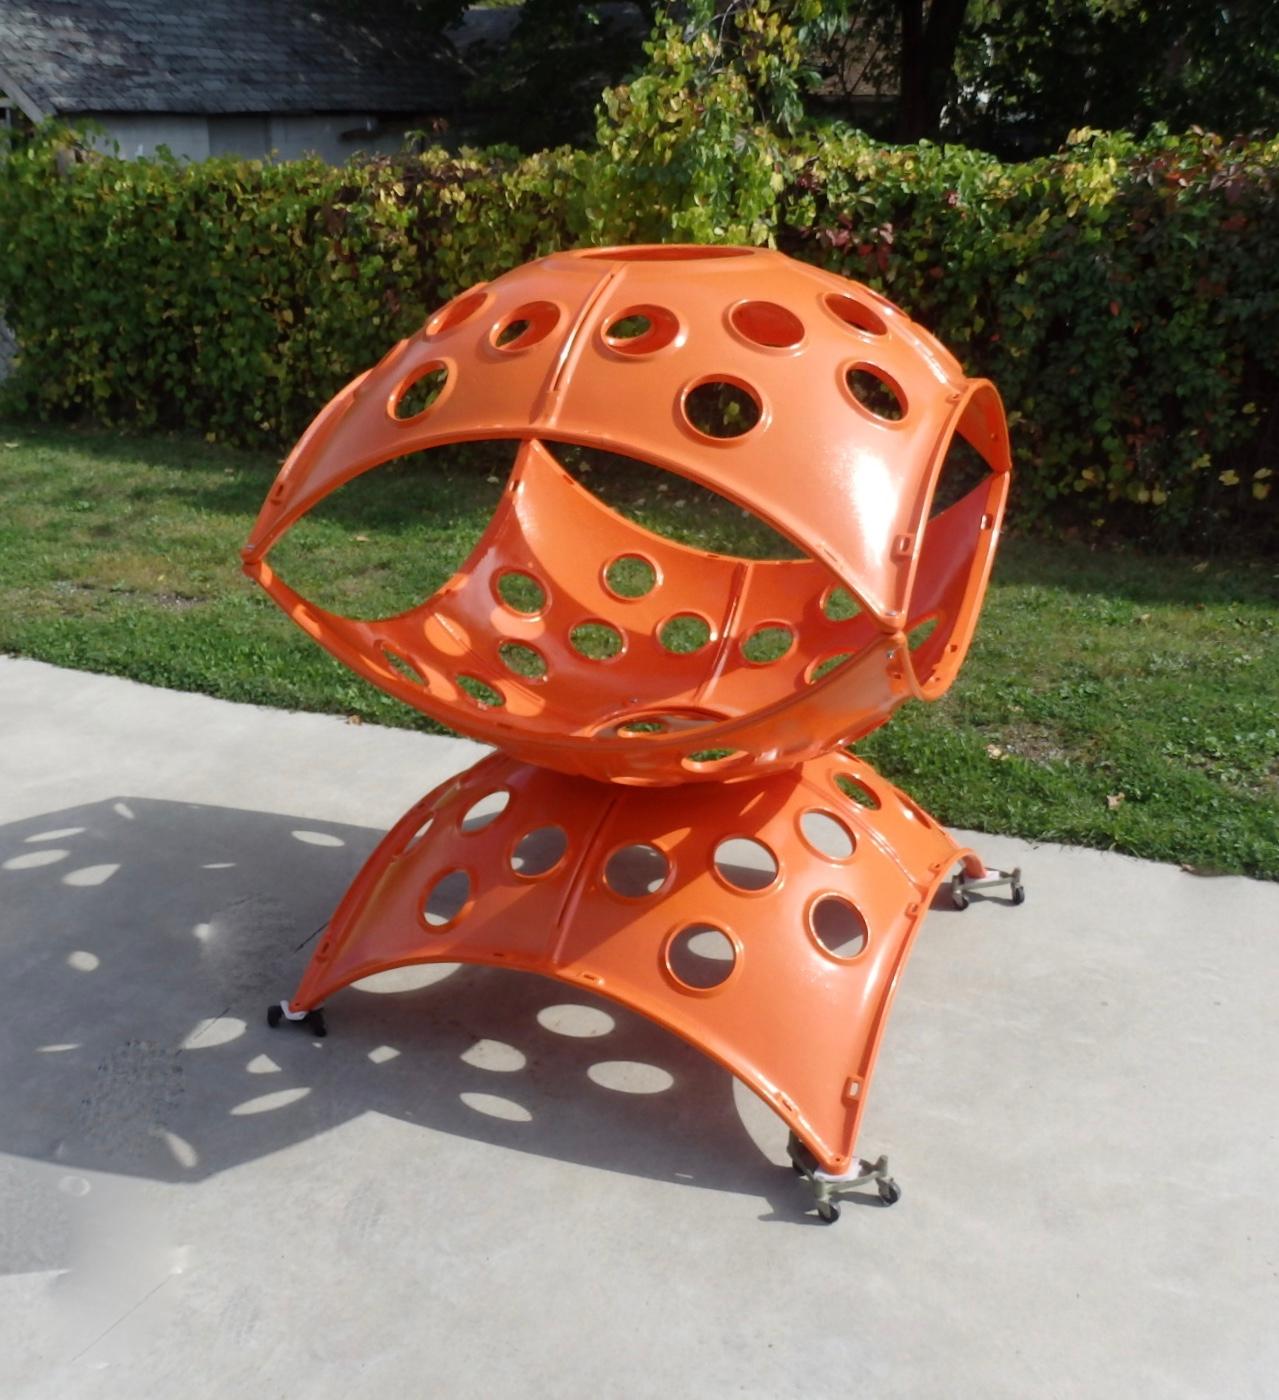 20th Century Large Modular Cast Aluminum Orange Yard Art Indoor Outdoor Playground Sculpture For Sale